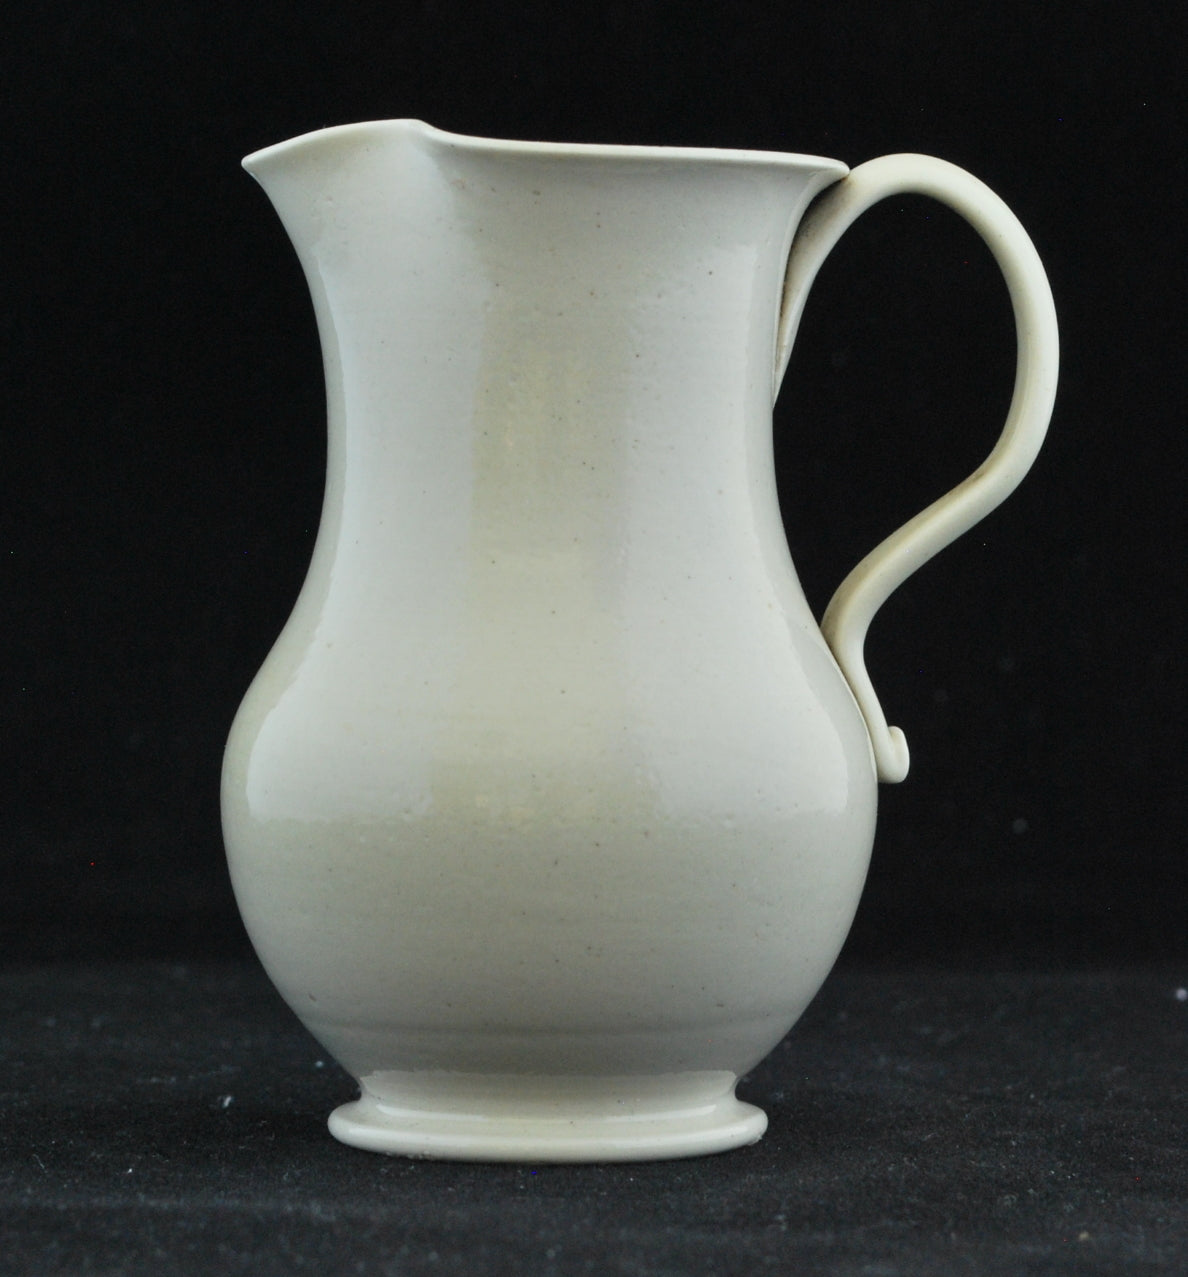 Small white jug